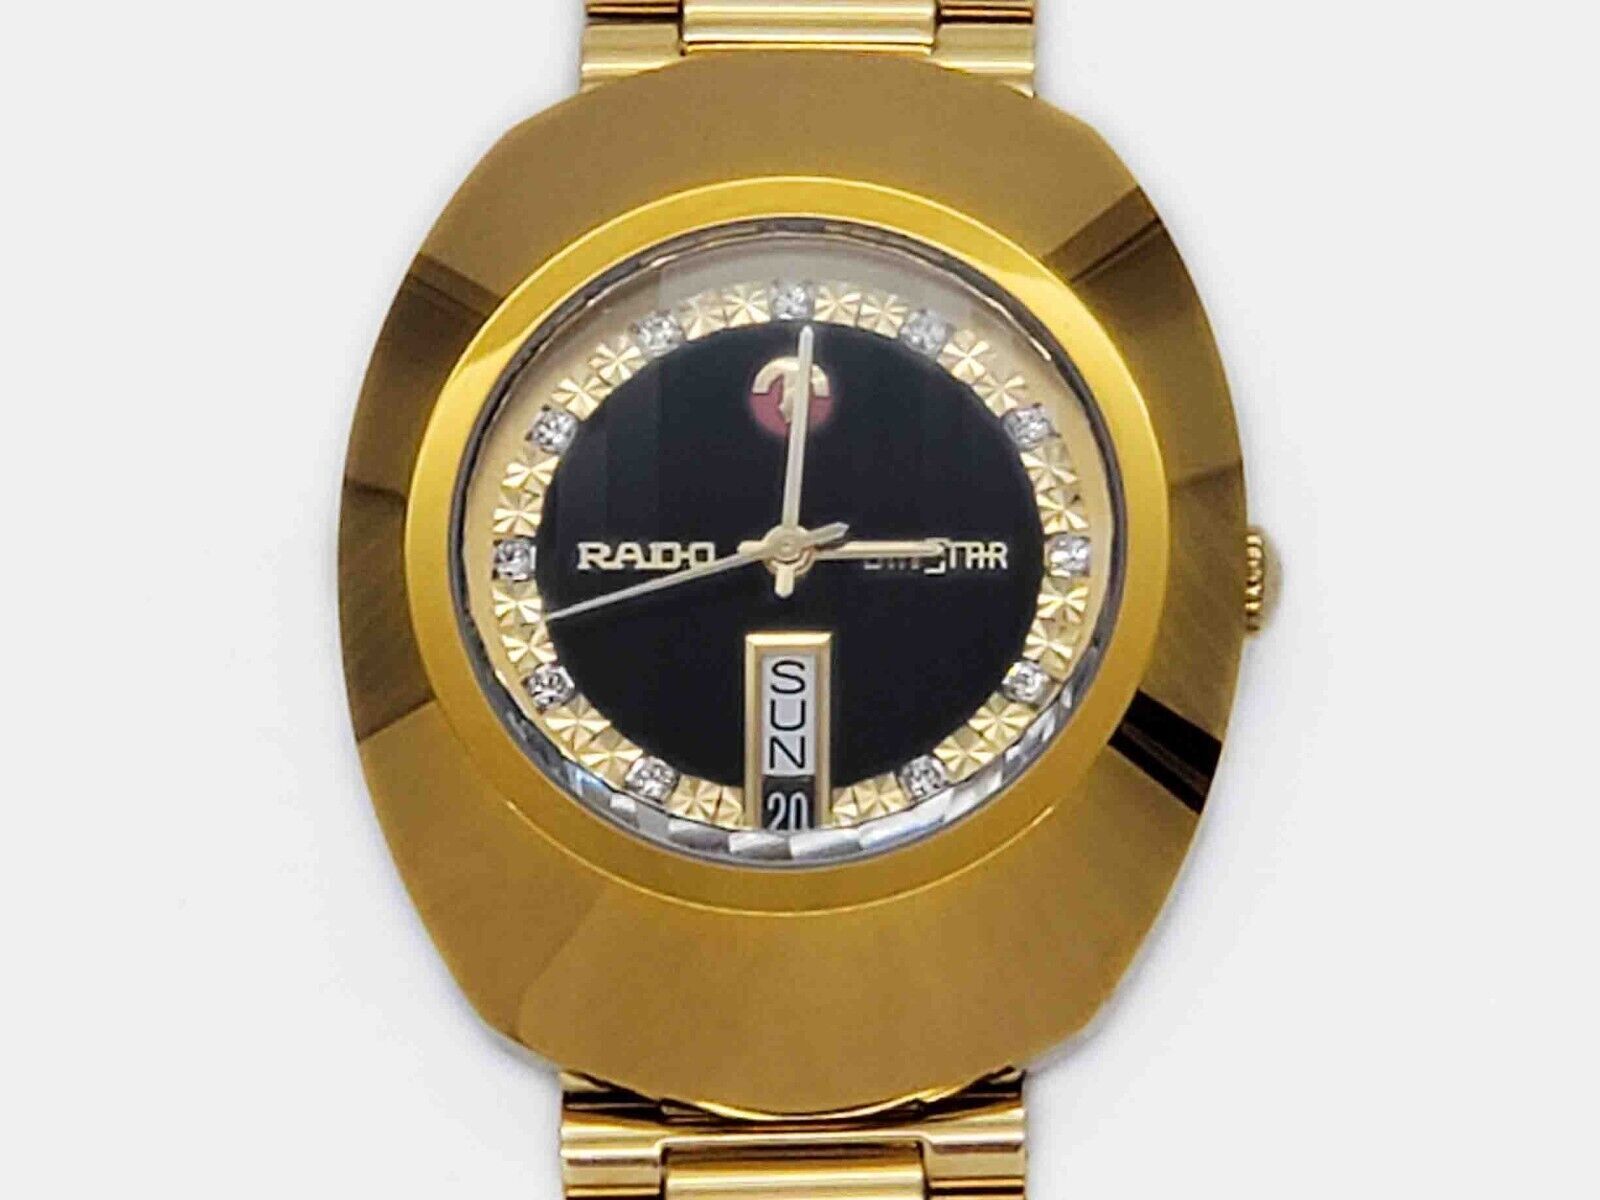 Rado Diastar Original Watch 35mm Case Gold Tone Stainless Steel #R12413583 + Box - $1,000.00